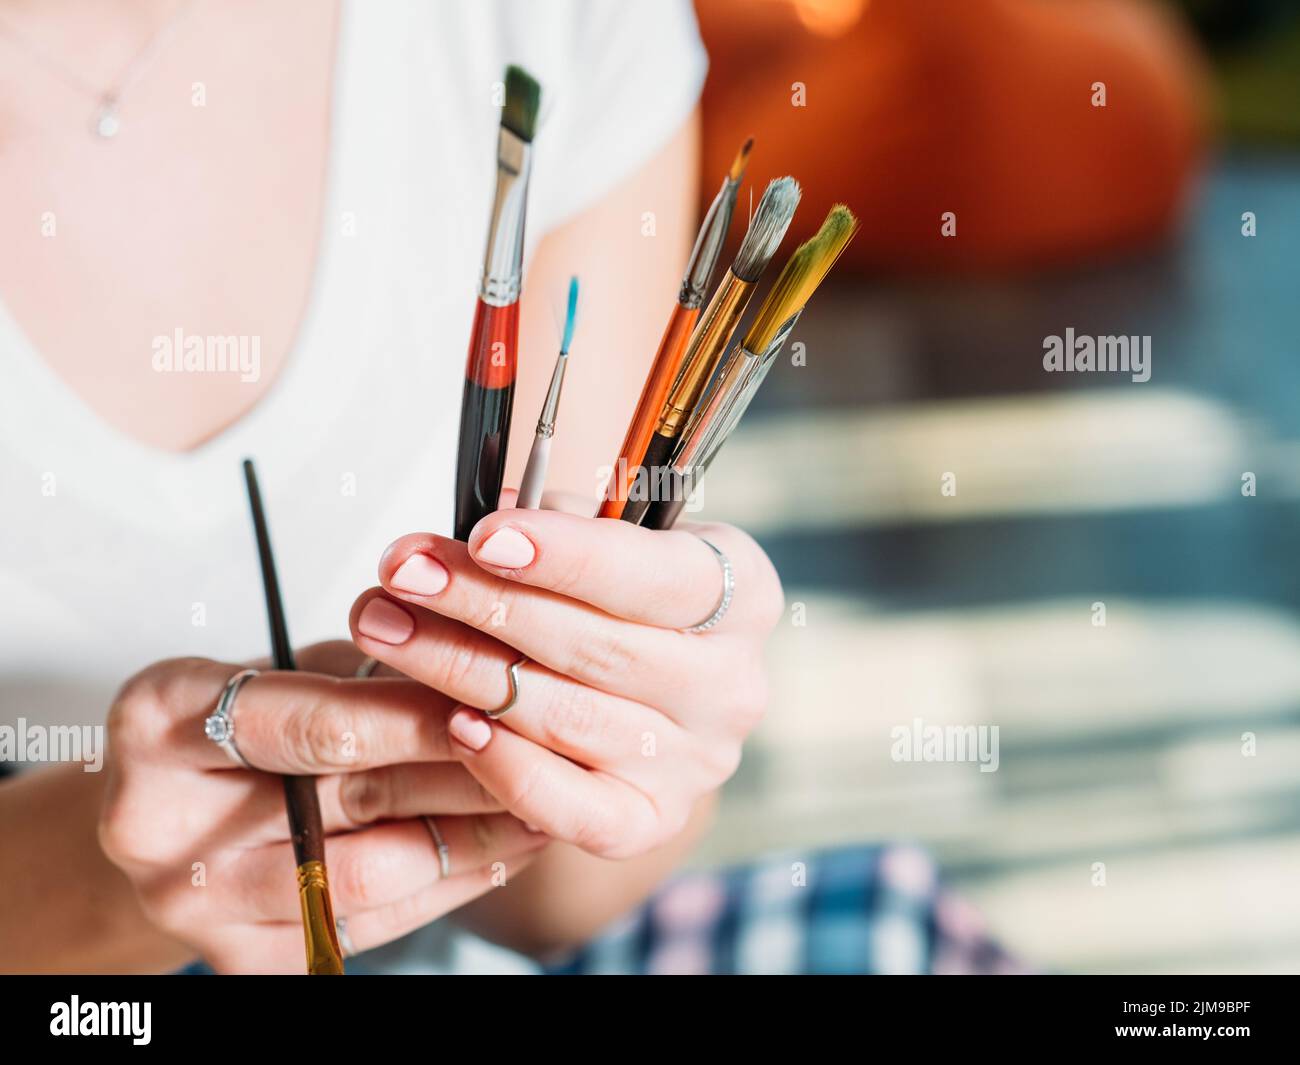 https://c8.alamy.com/comp/2JM9BPF/artwork-studio-workplace-paintbrush-artist-closeup-2JM9BPF.jpg